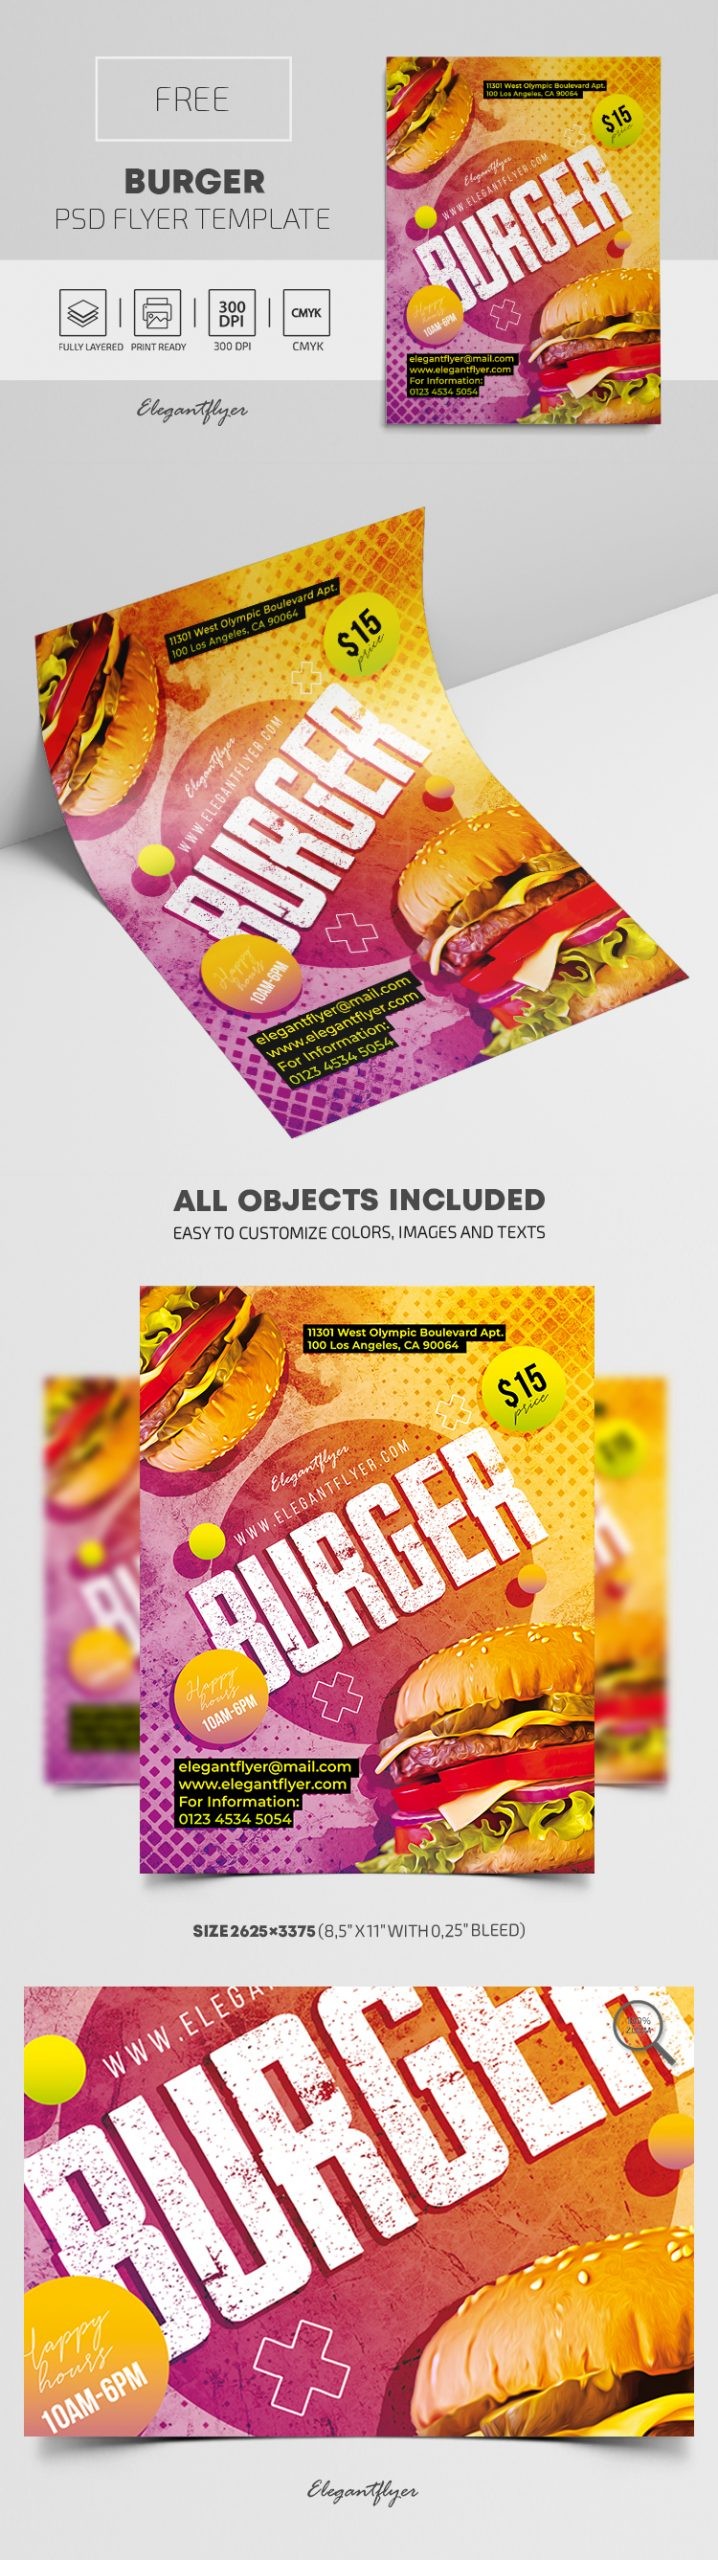 Burger by ElegantFlyer